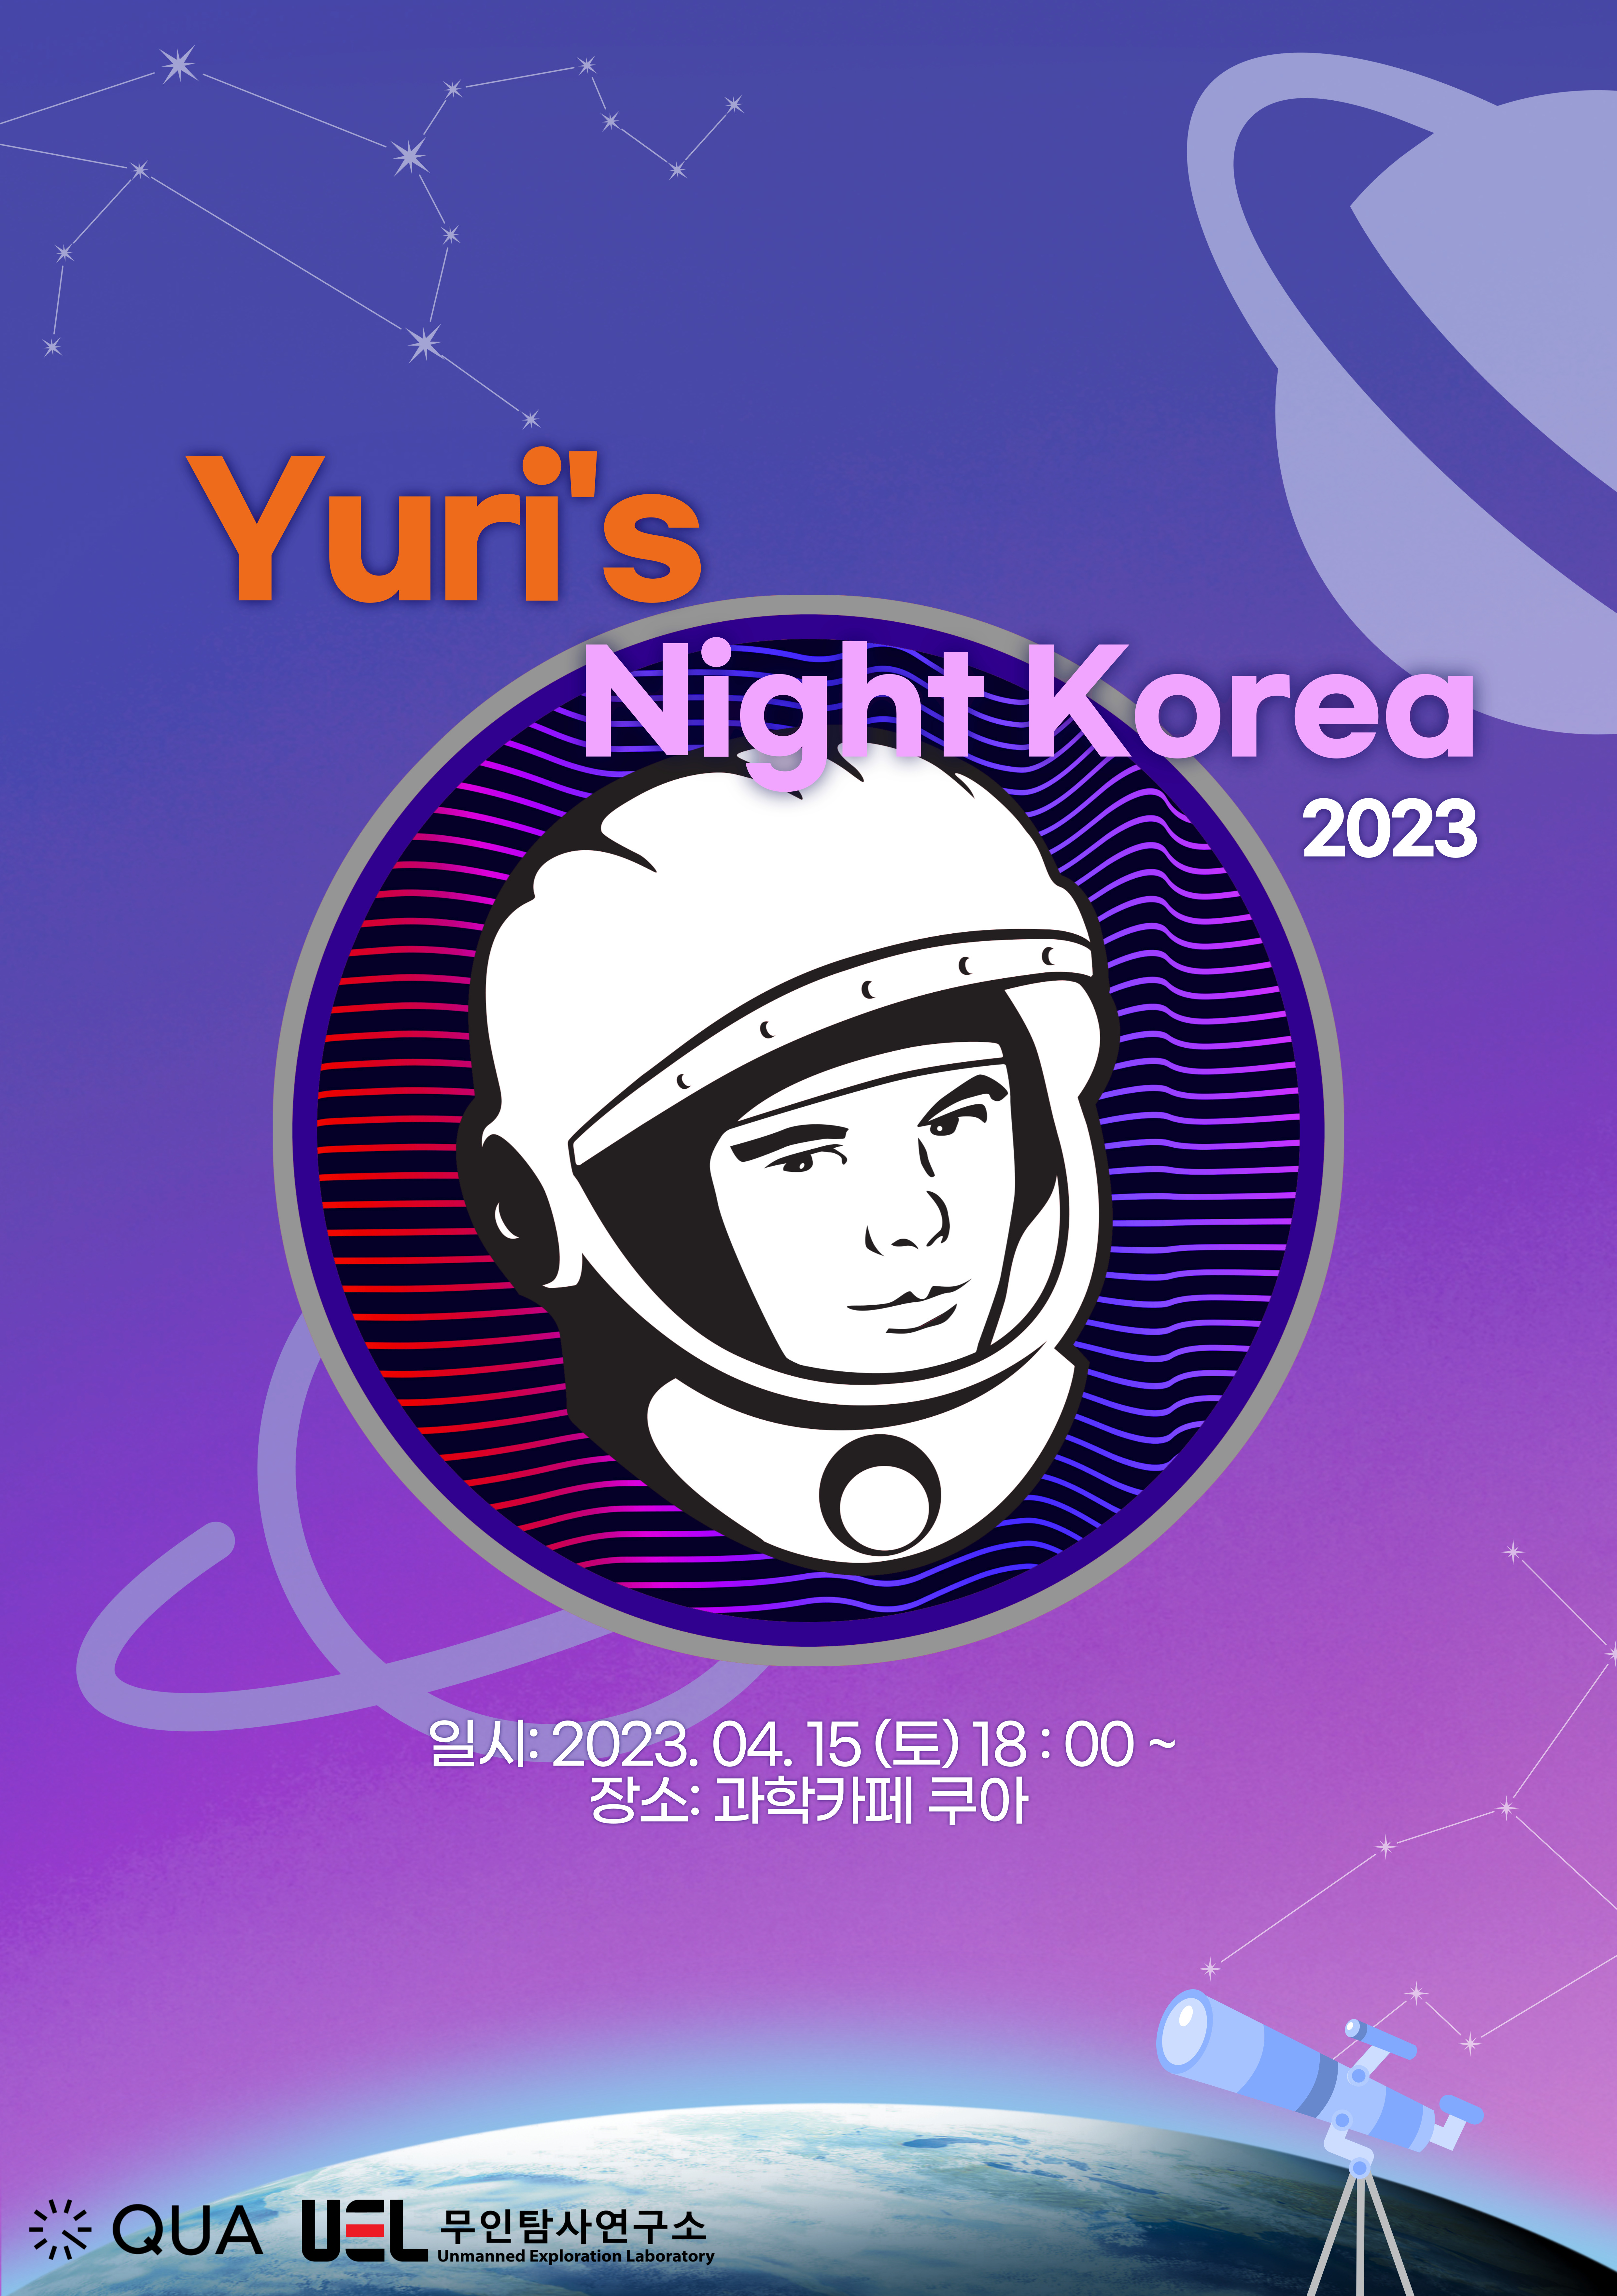 Yuri’s Night Korea 2023